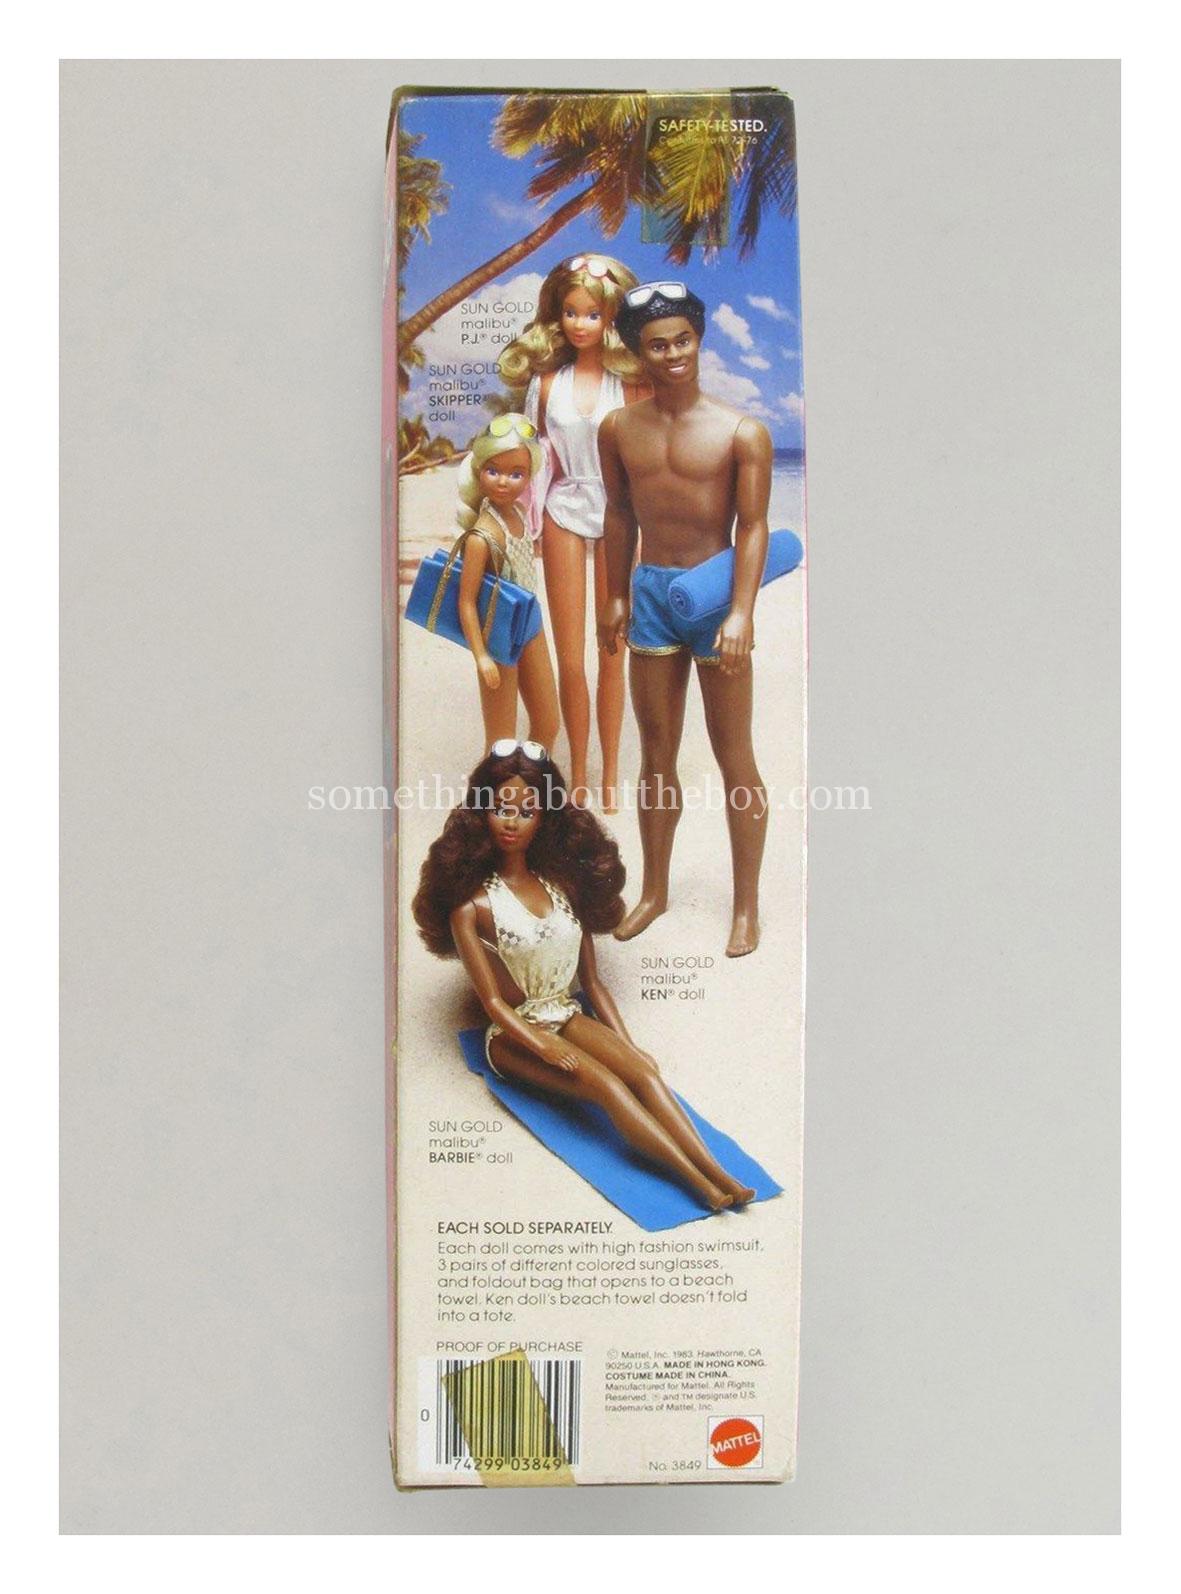 1985 #3849 Sun Gold Malibu Ken reverse of packaging